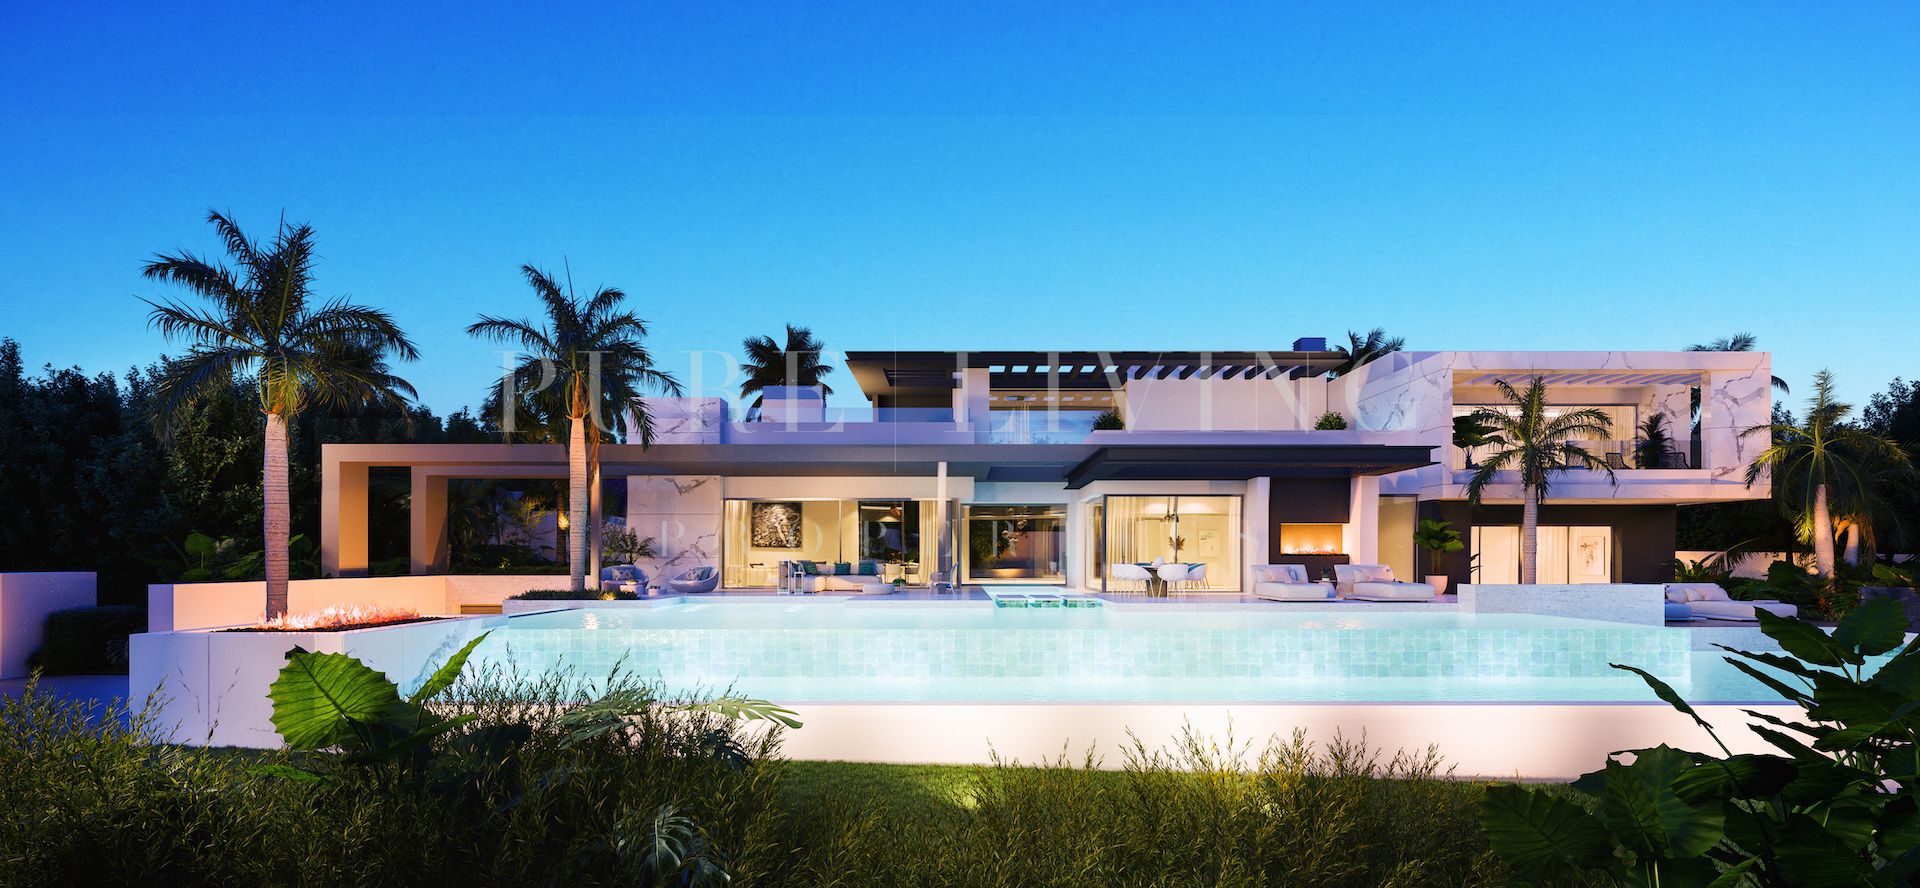 Luxury new built seven bedroom villa with amazing views in Paraiso Alto